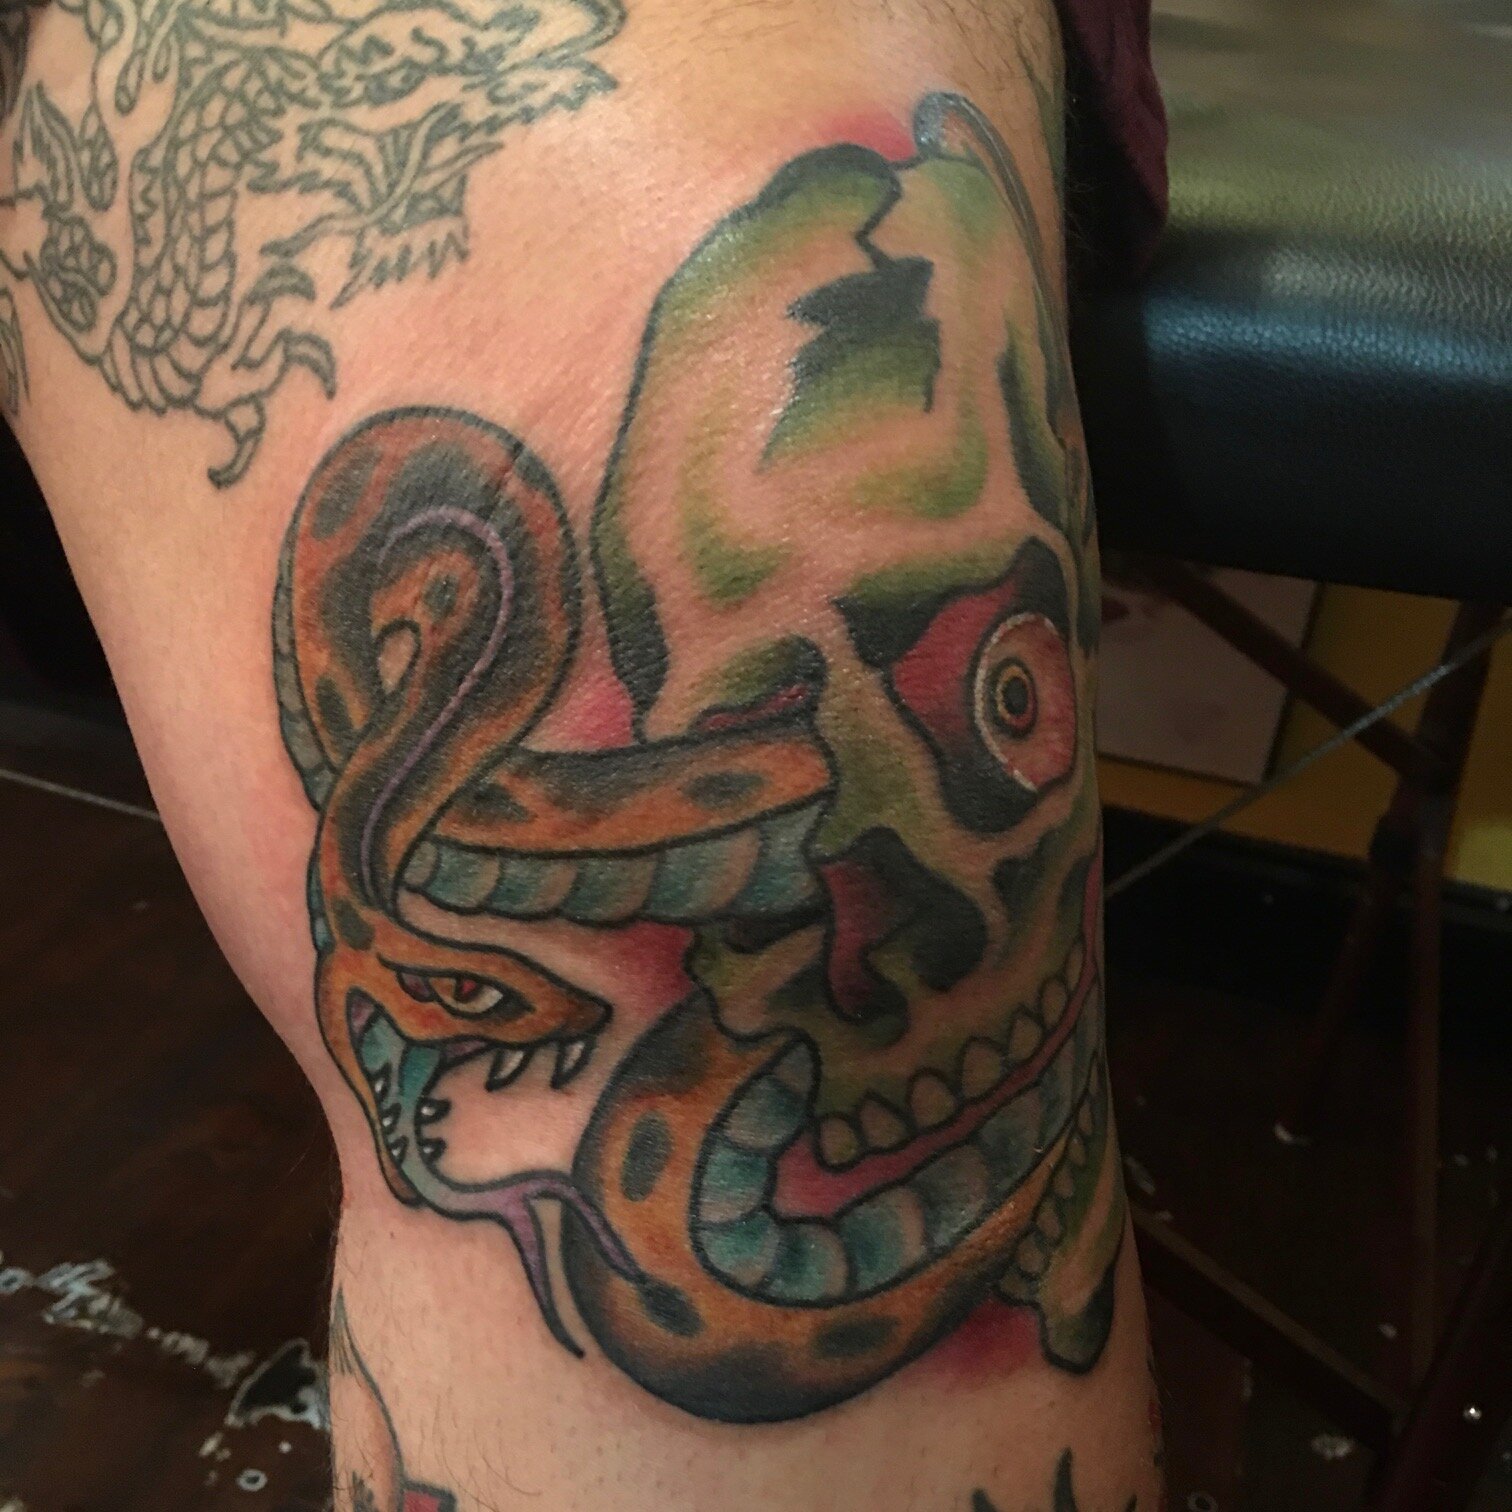 Skull and snake tattoo on knee by Josh Hanes at Southern Star Tattoo in Atlanta, Georgia